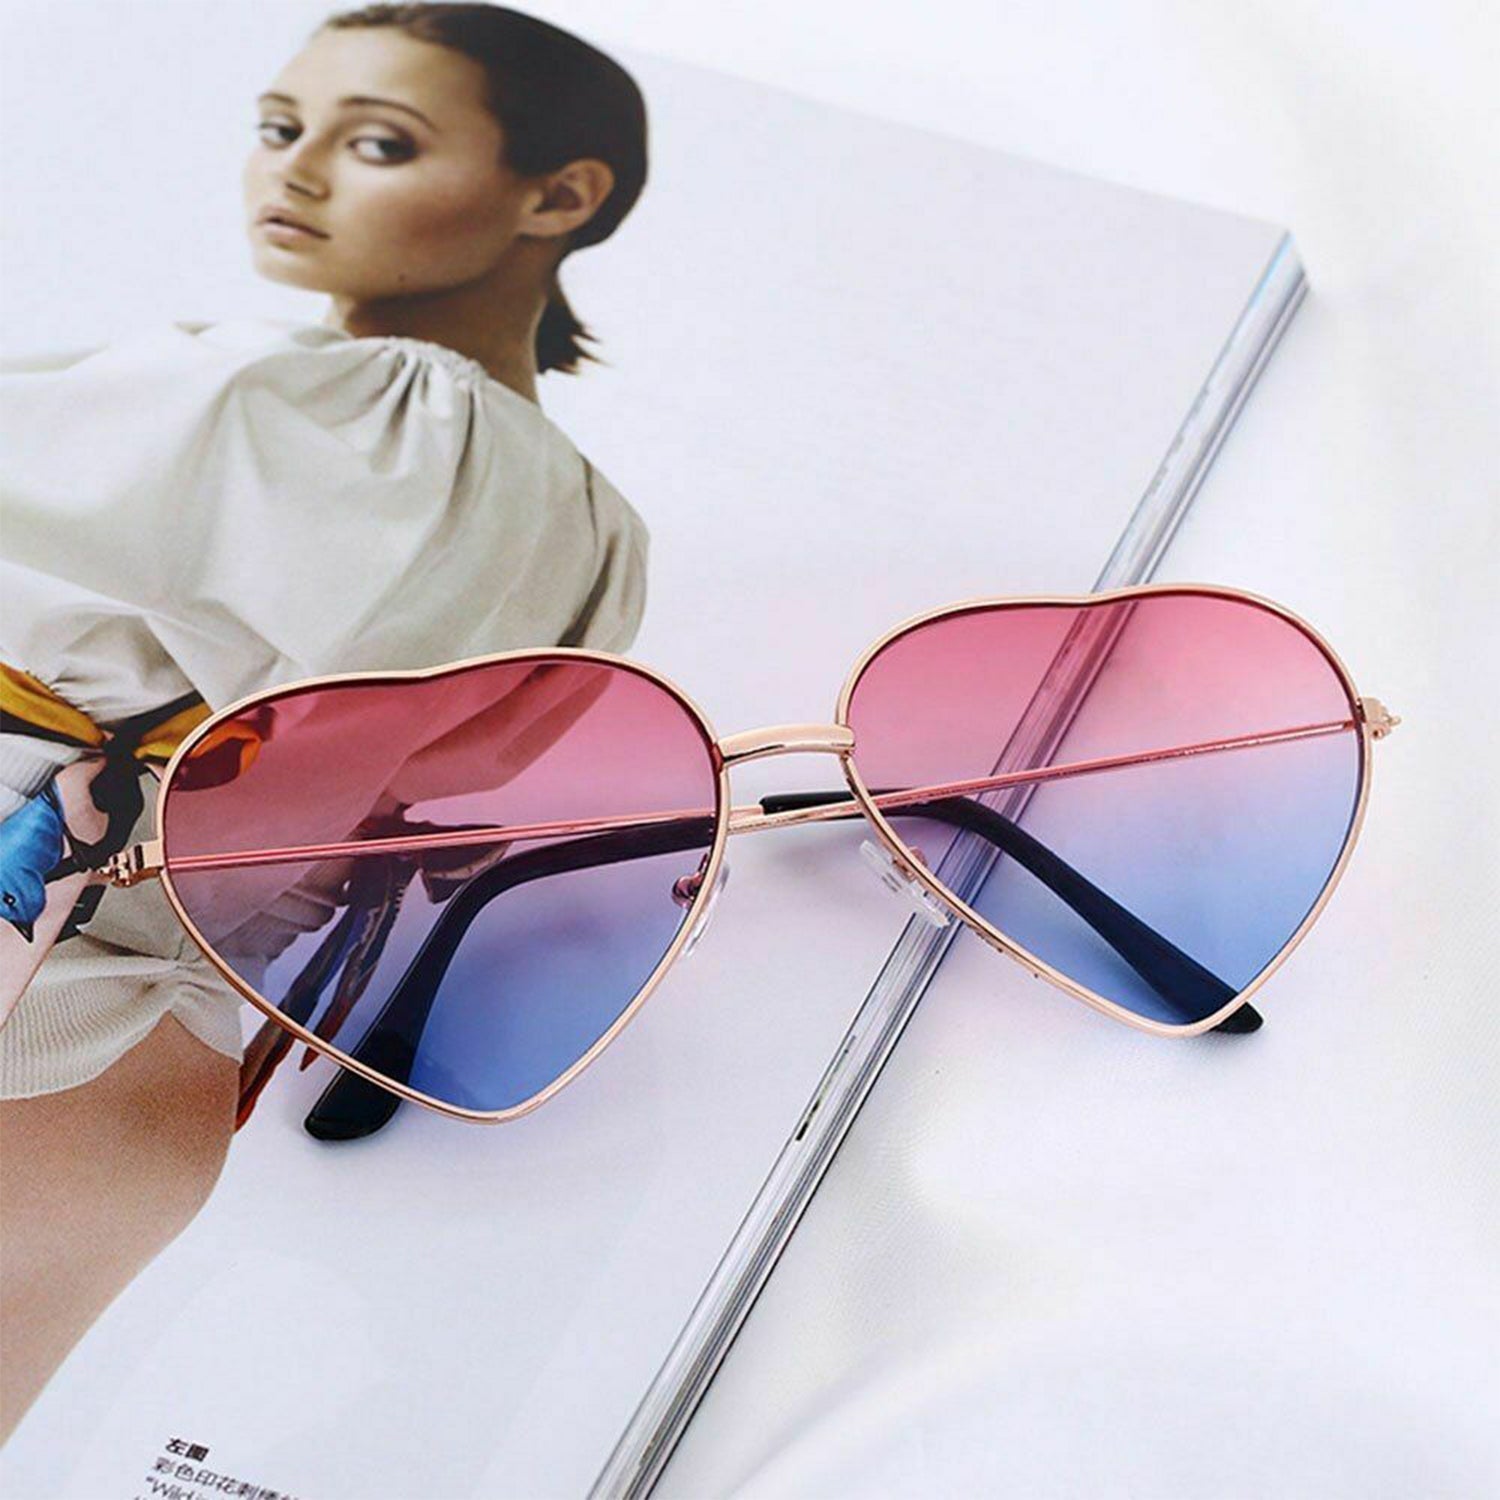 4952 Multi color Heart Shaped Metal Reflective Mirror Lens Women's Sunglasses DeoDap